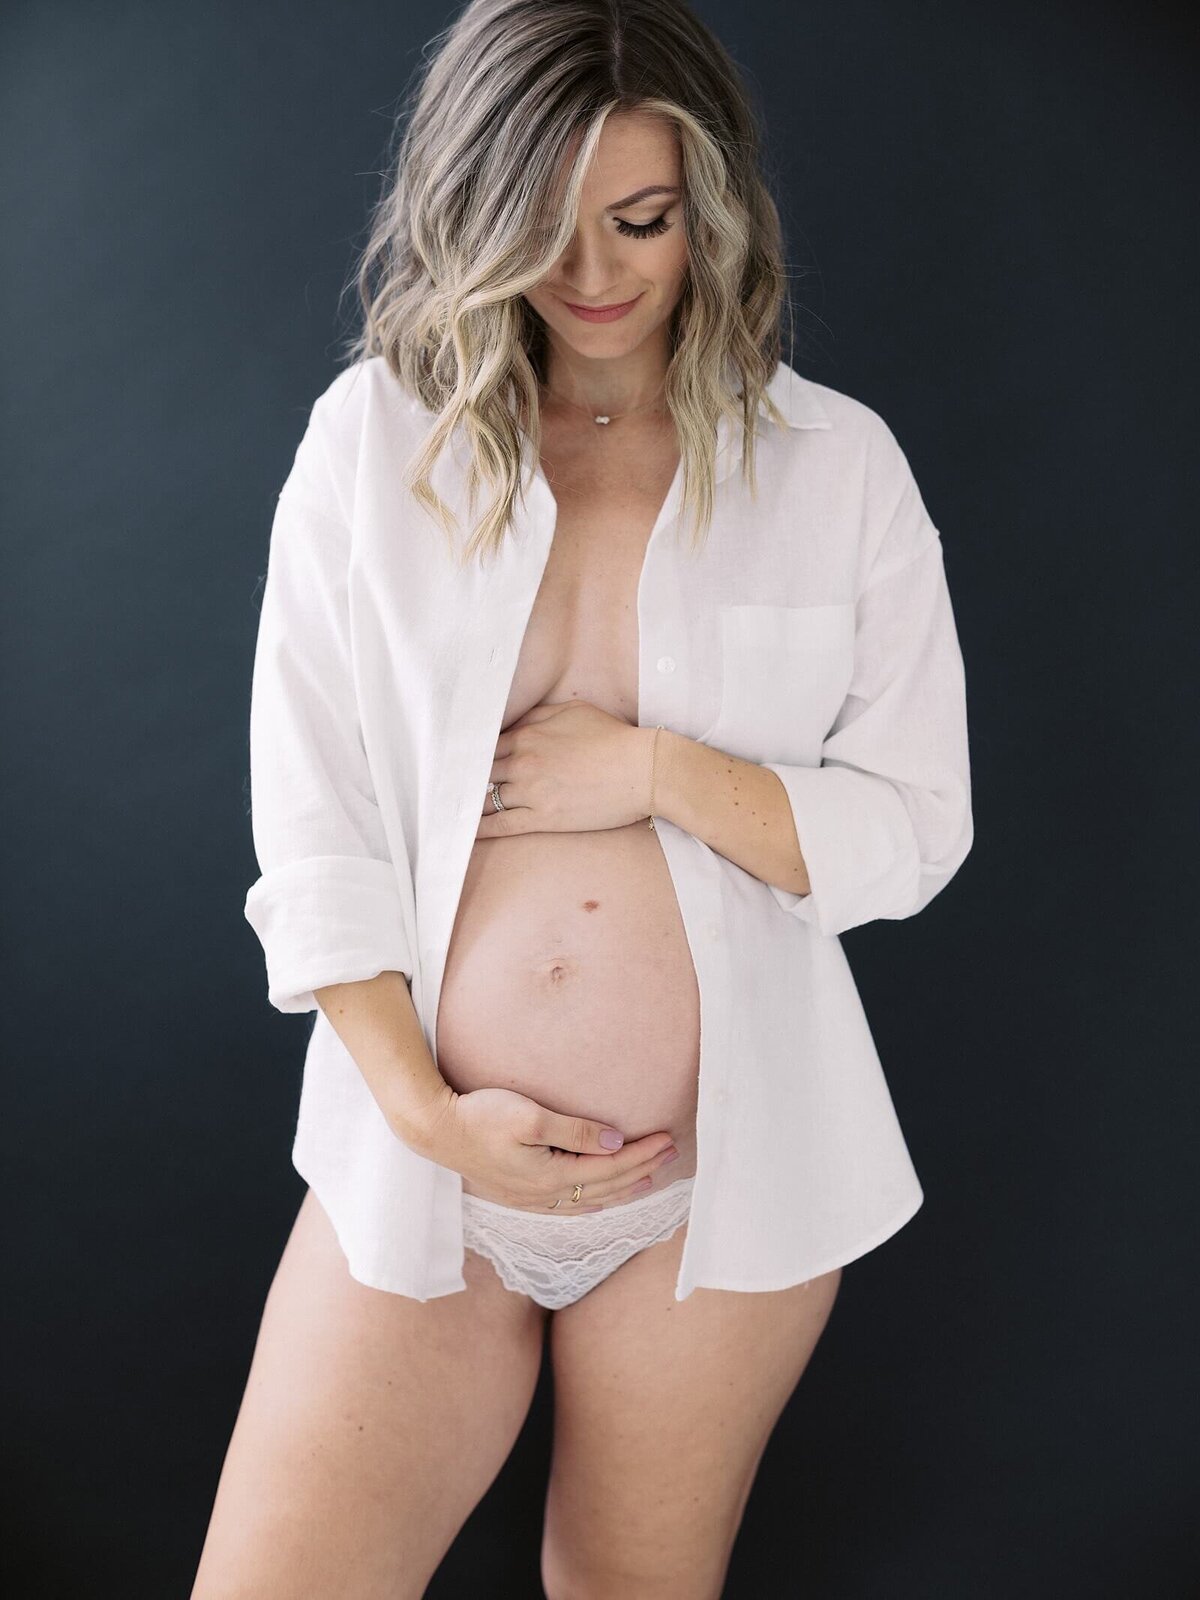 seattle-maternity-photographer-jacqueline-benet_0023